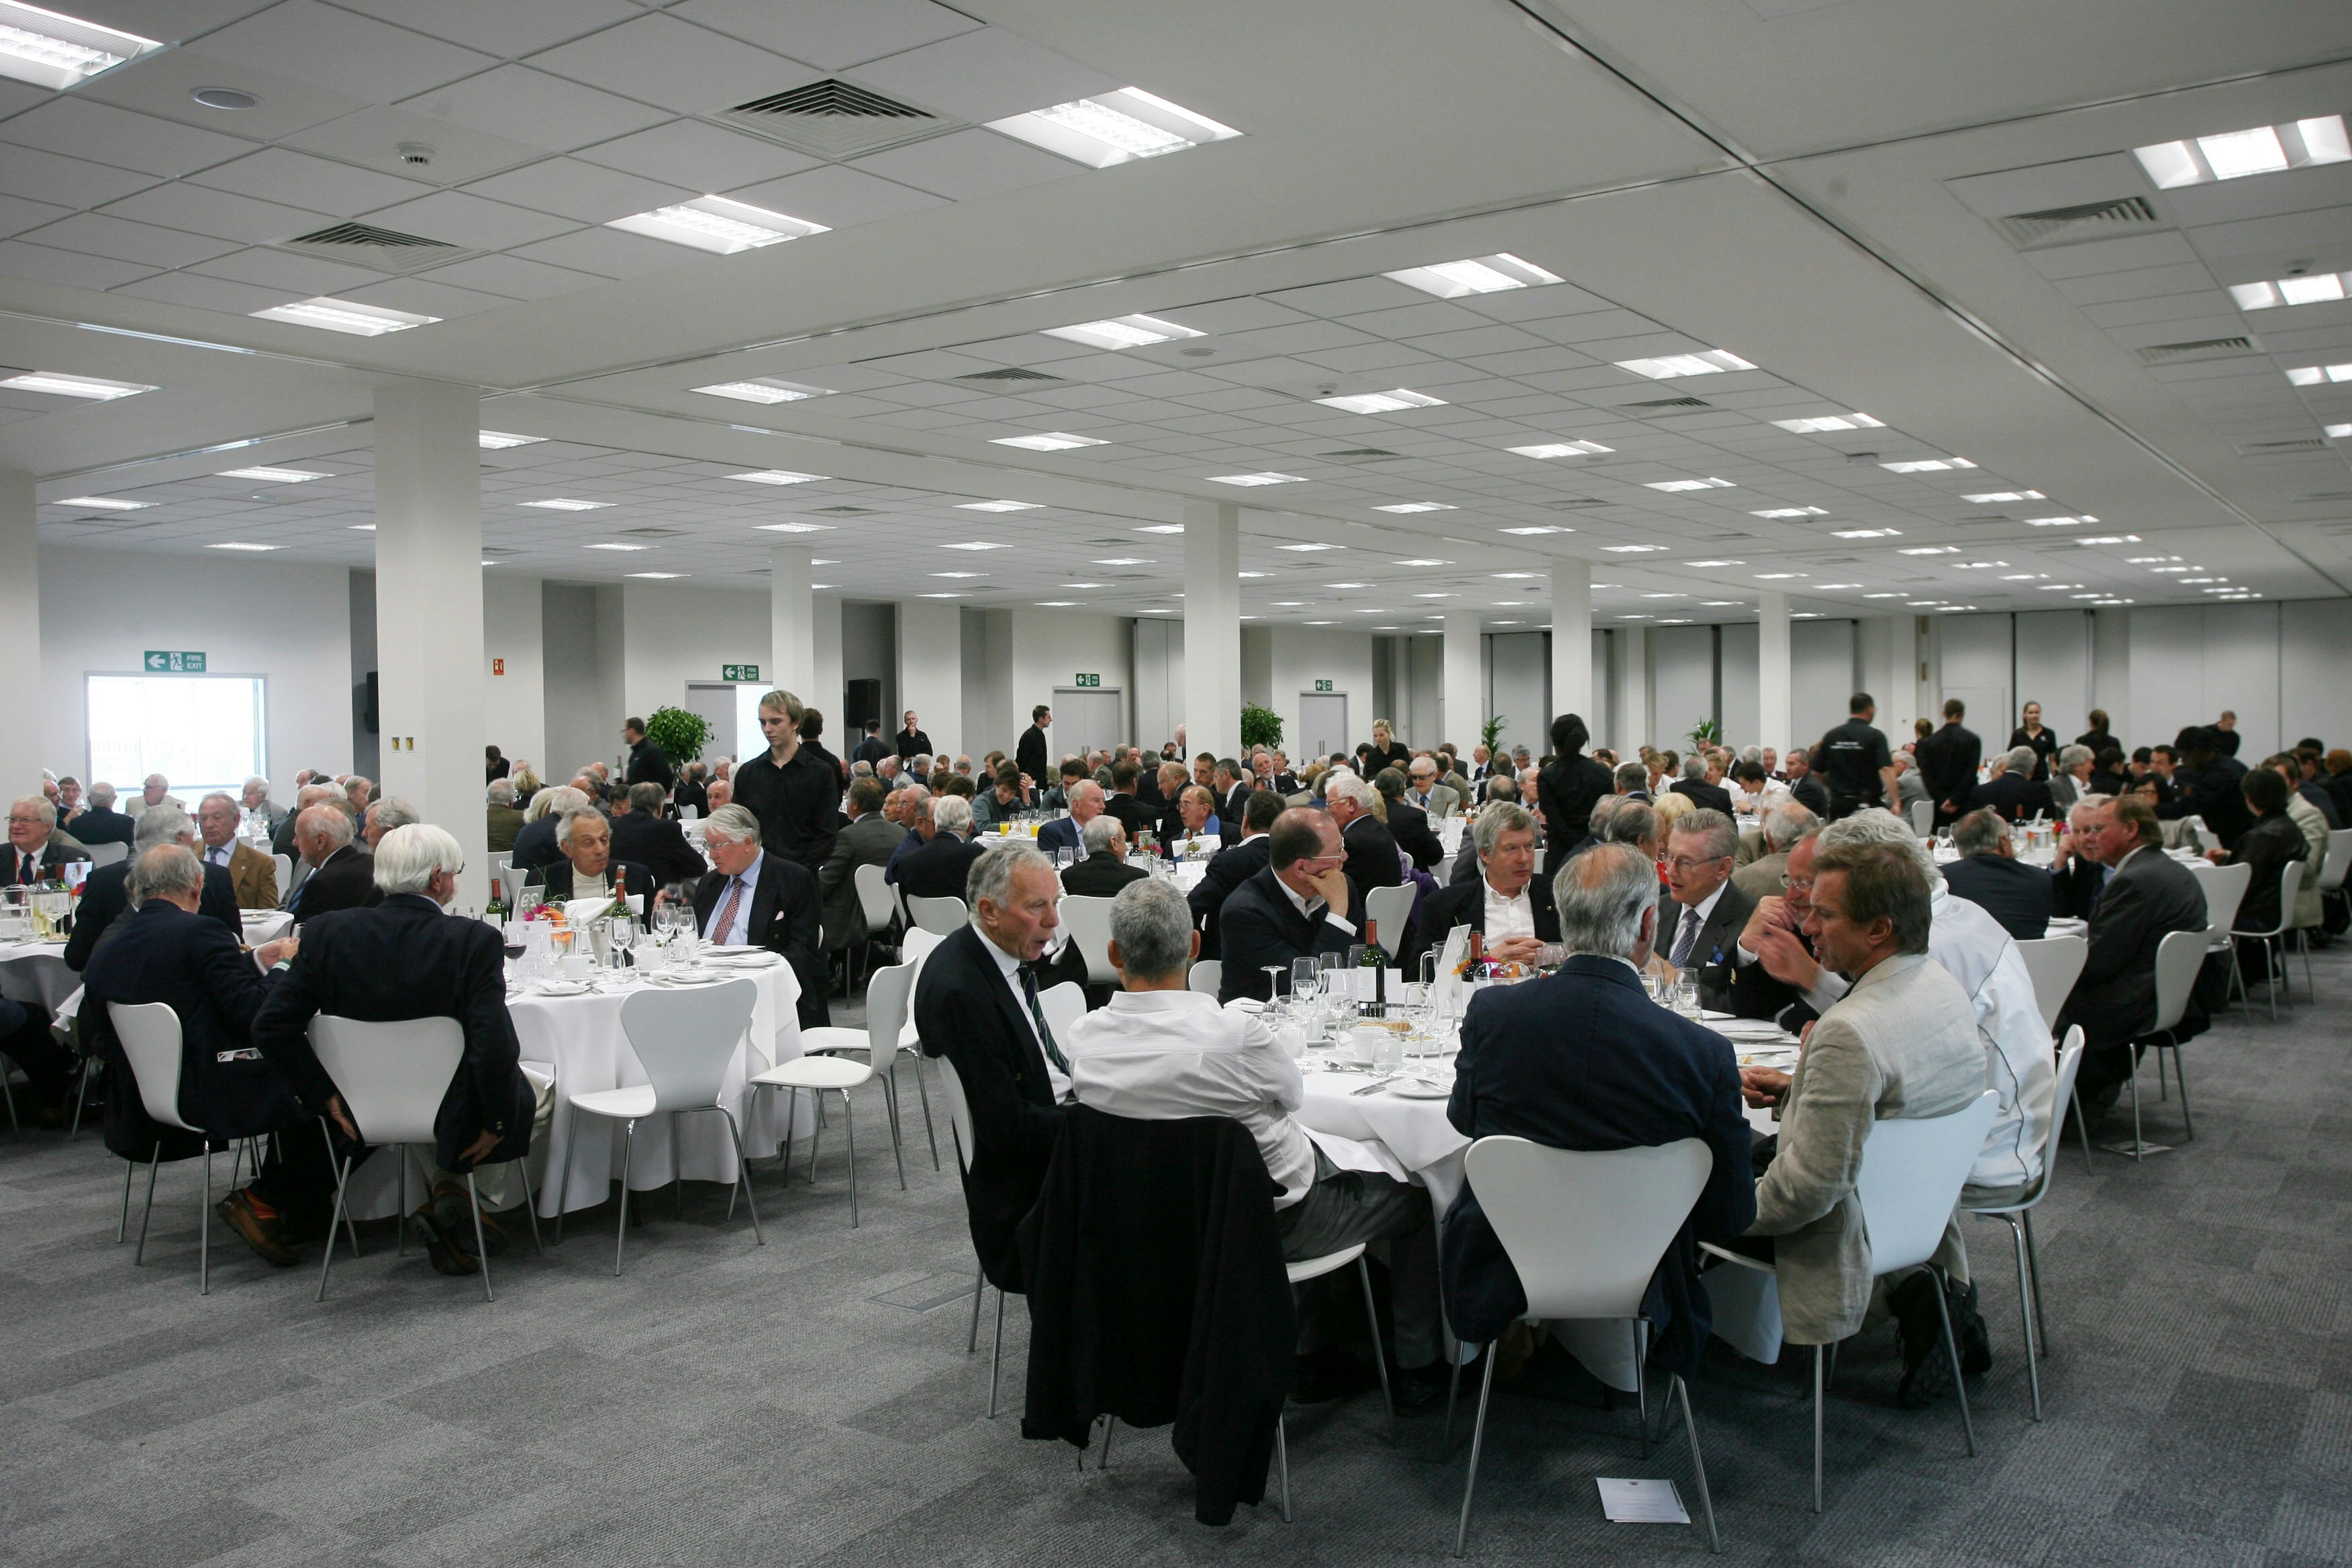 Awards Ceremony Venues in Birmingham - Silverstone International Conference & Exhibition Centre